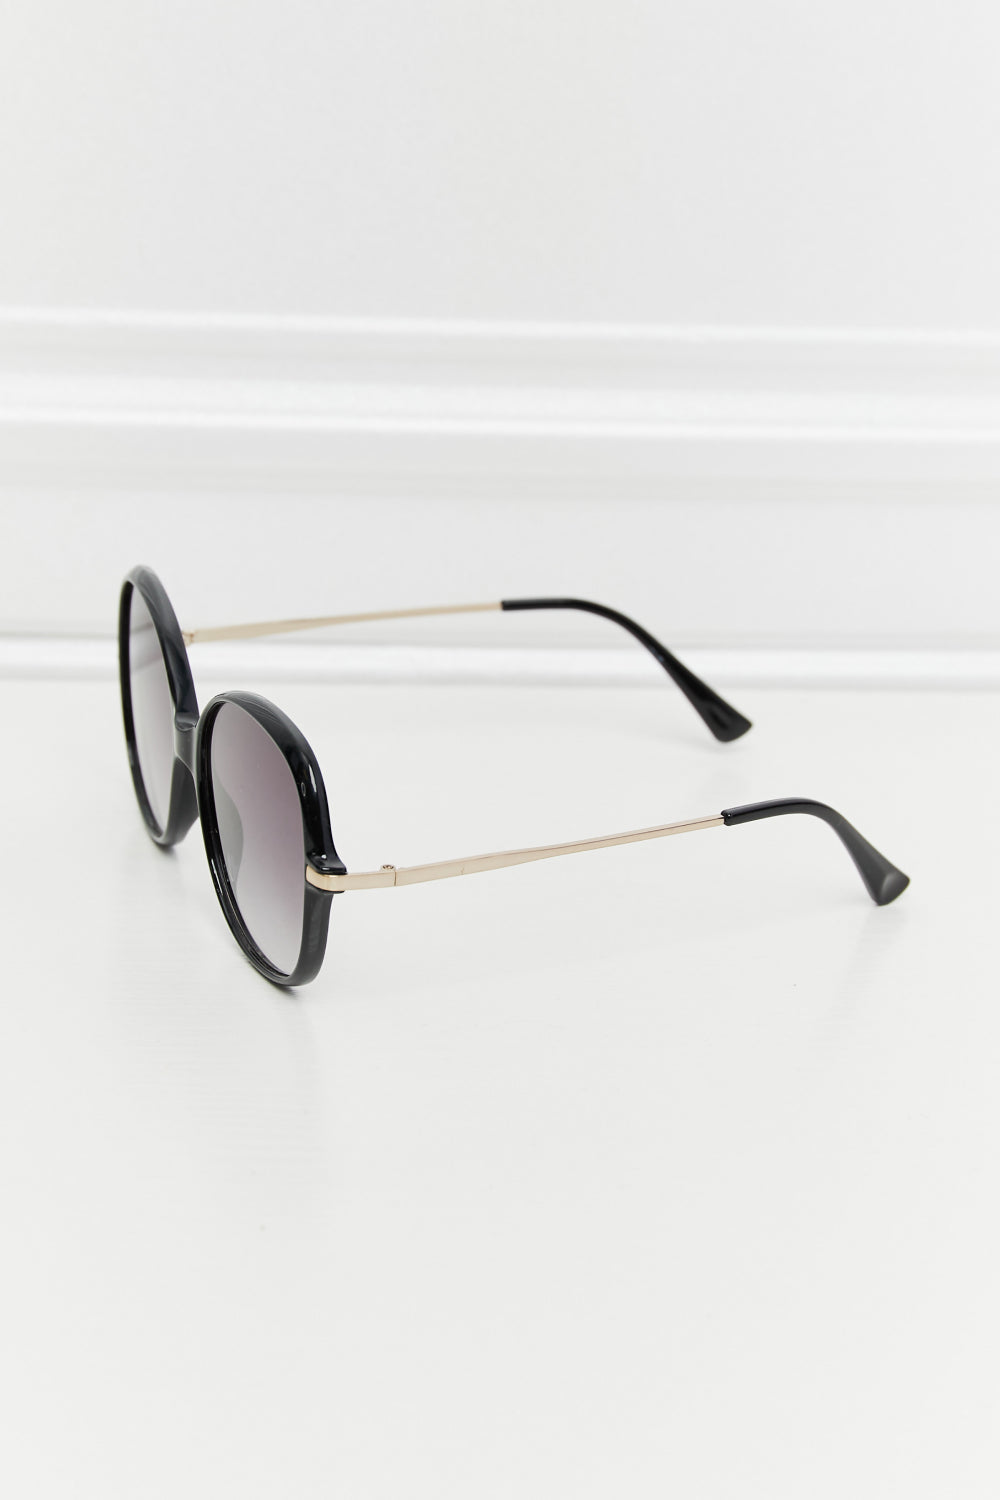 Metal-Plastic Hybrid Full Rim Sunglasses - Sunglasses - FITGGINS